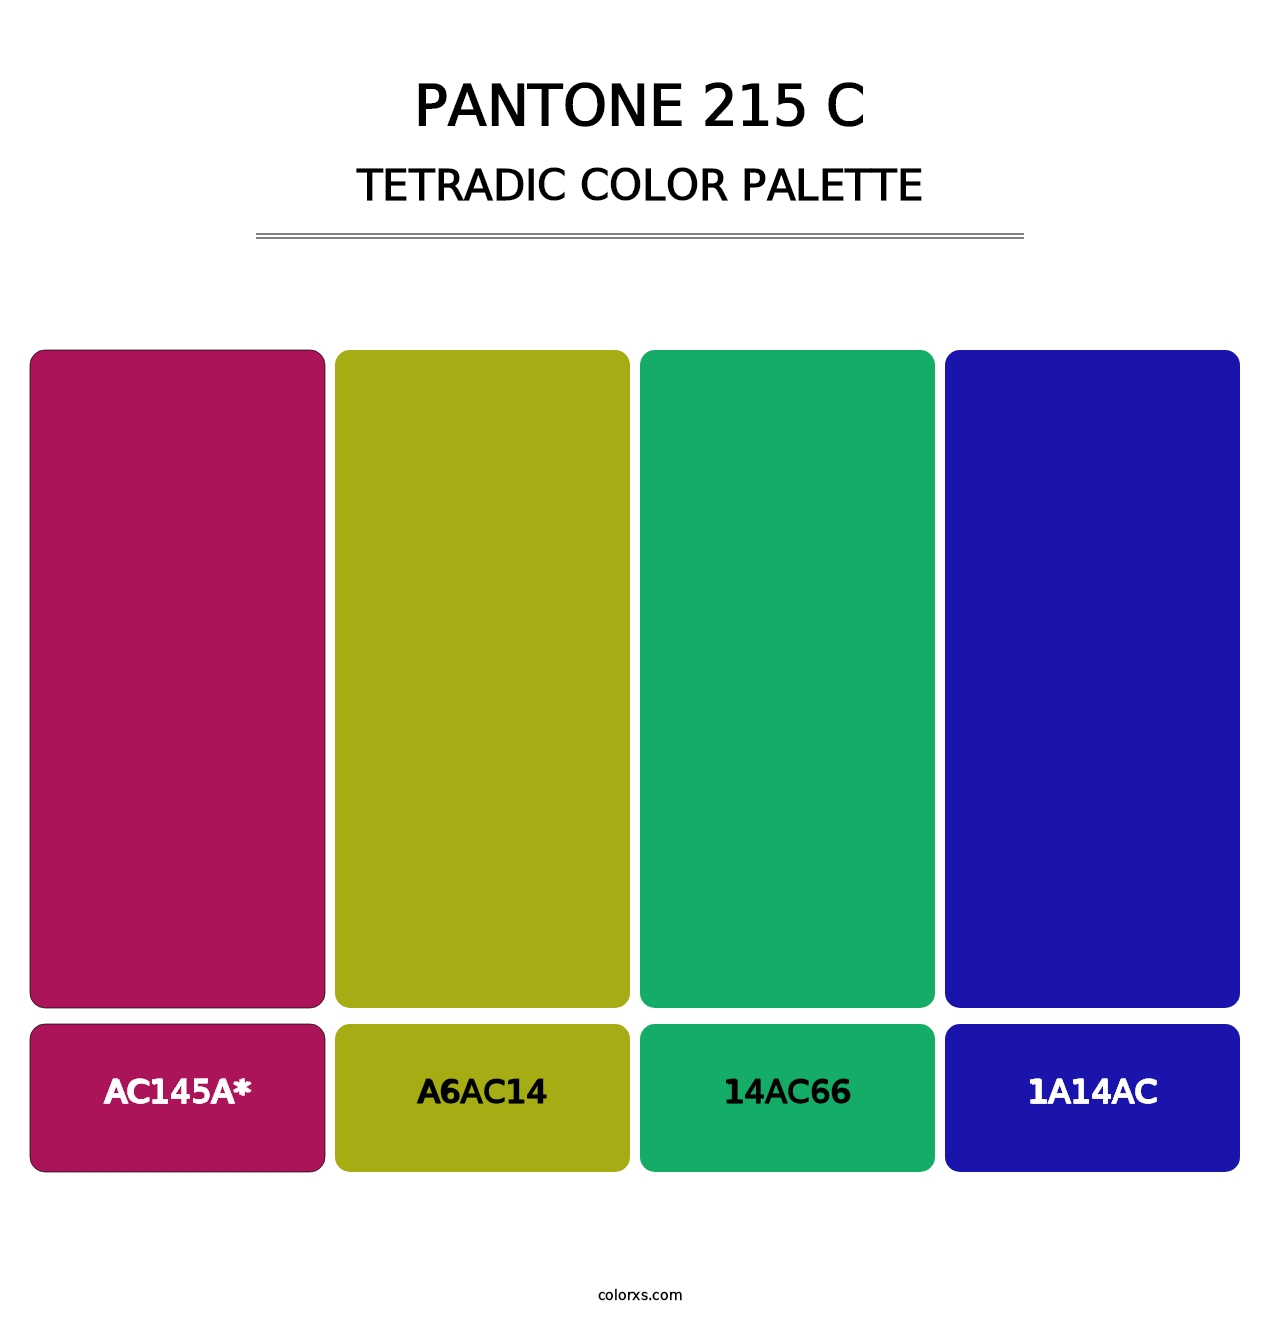 PANTONE 215 C - Tetradic Color Palette